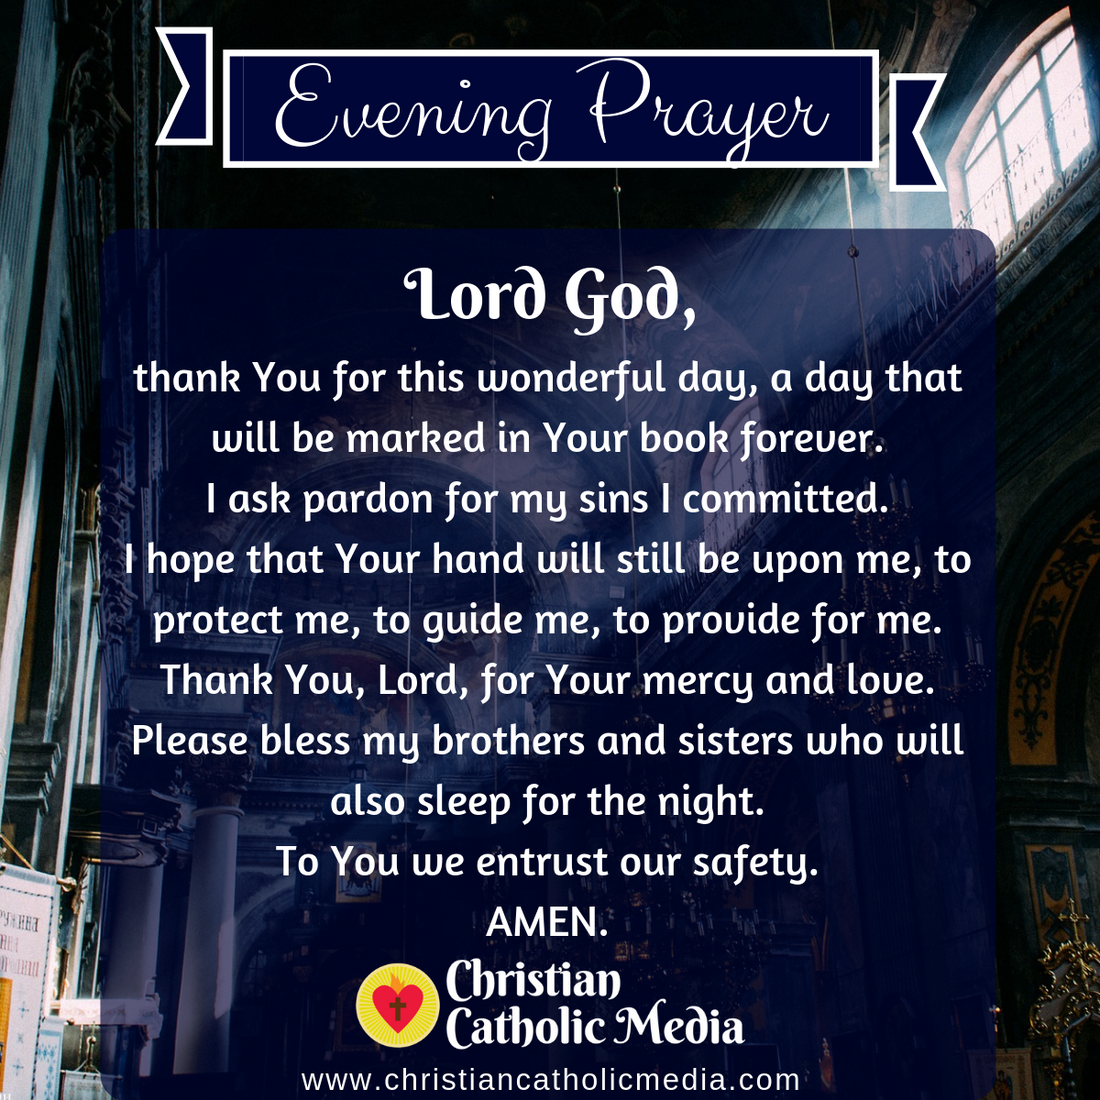 Evening Prayer Catholic Tuesday 4-21-2020